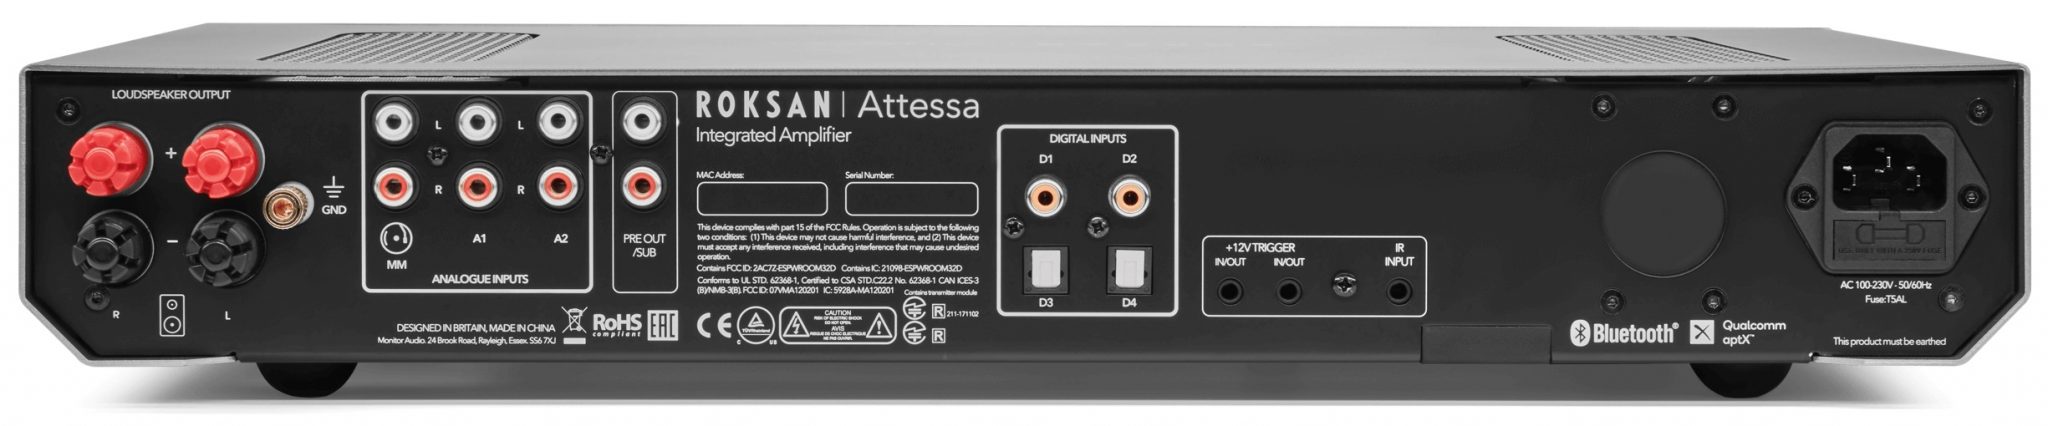 Roksan Attessa Integrated Amp zwart - achterkant - Stereo versterker